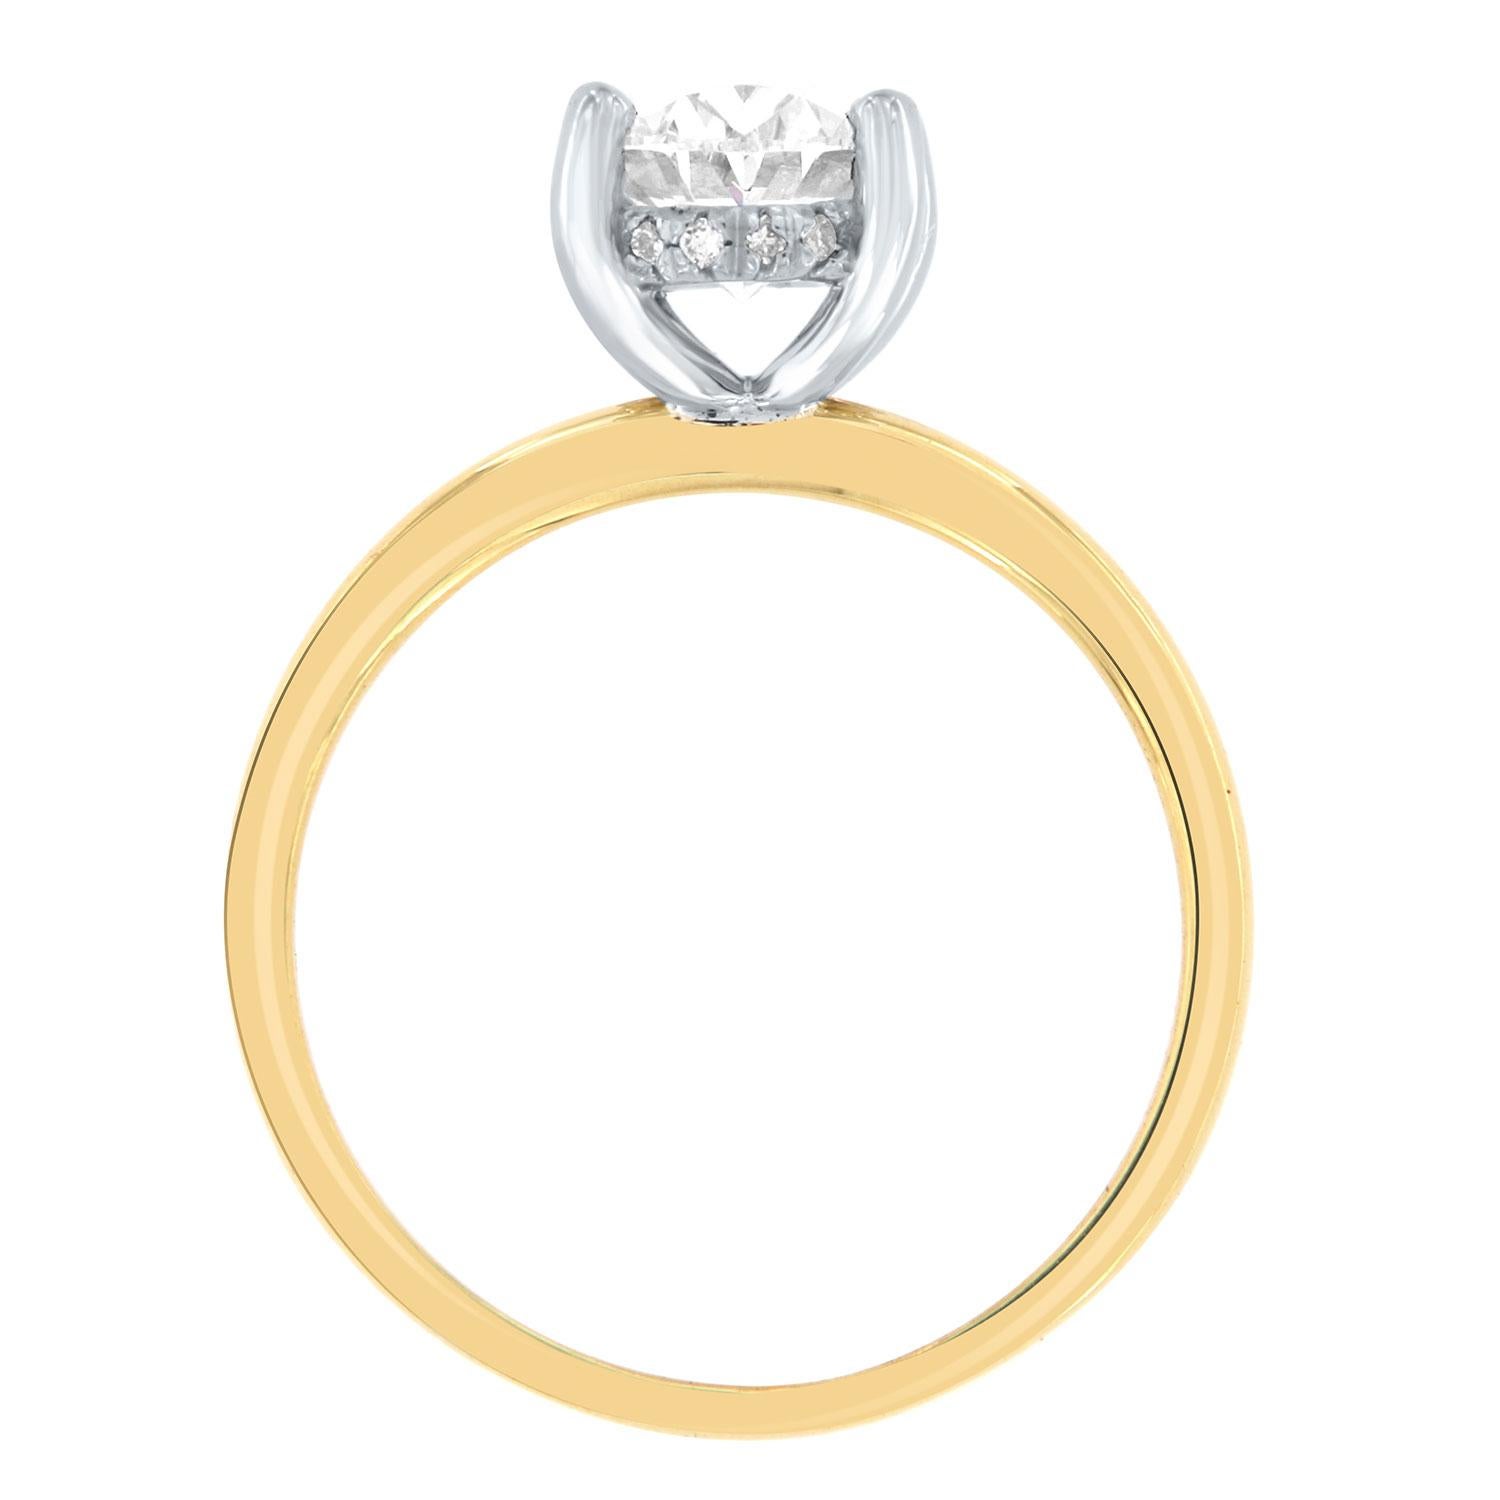 1.5 carat oval diamond ring with hidden halo